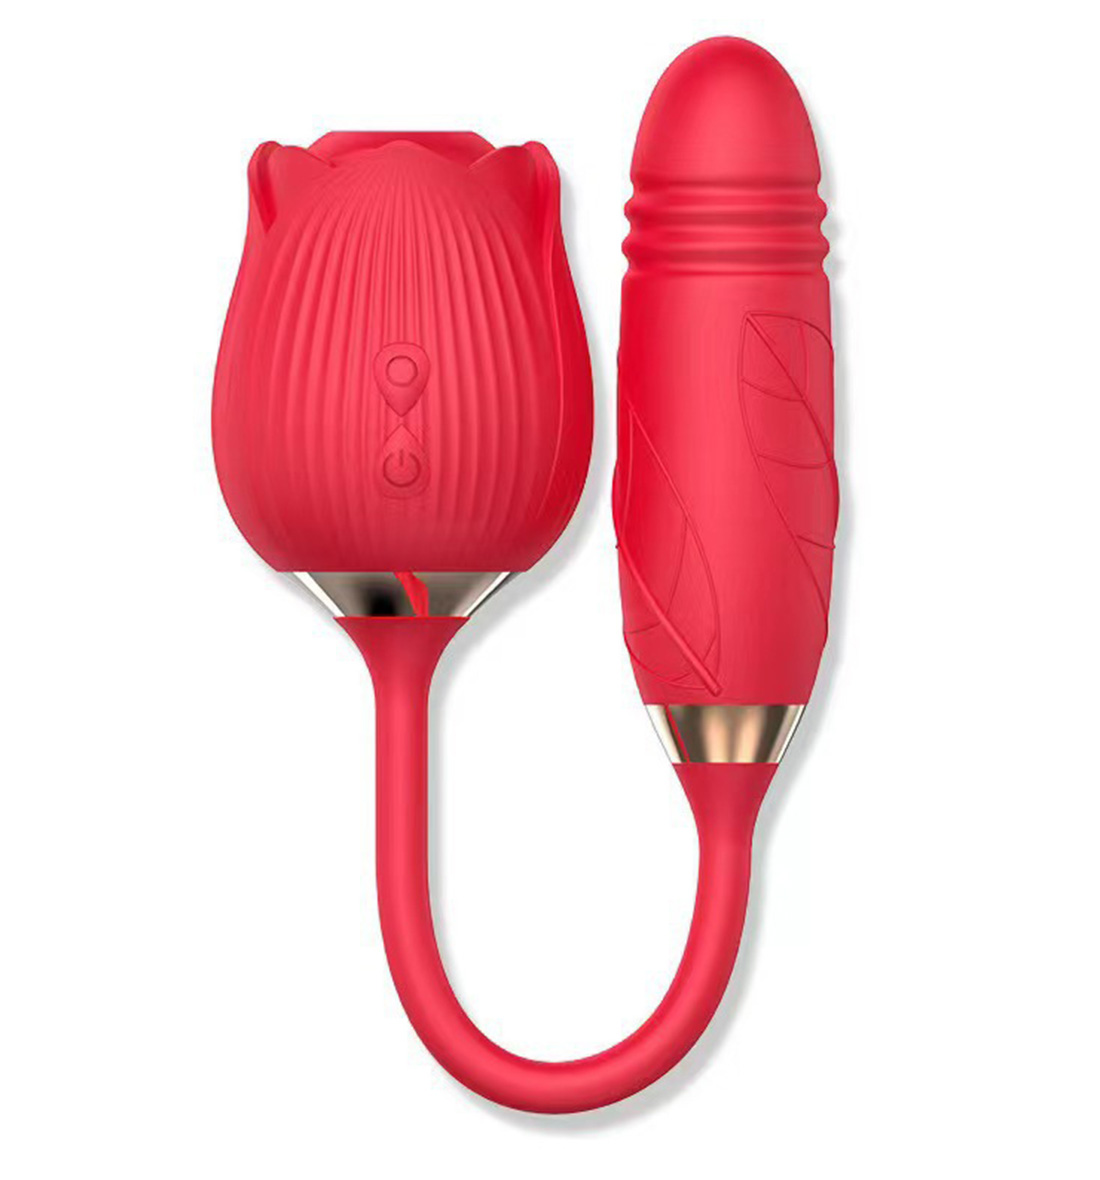 rose toy,clit sucker,rose toy vibrator,rose dildo vibrator,best rose toy,rose thrusting vibrator